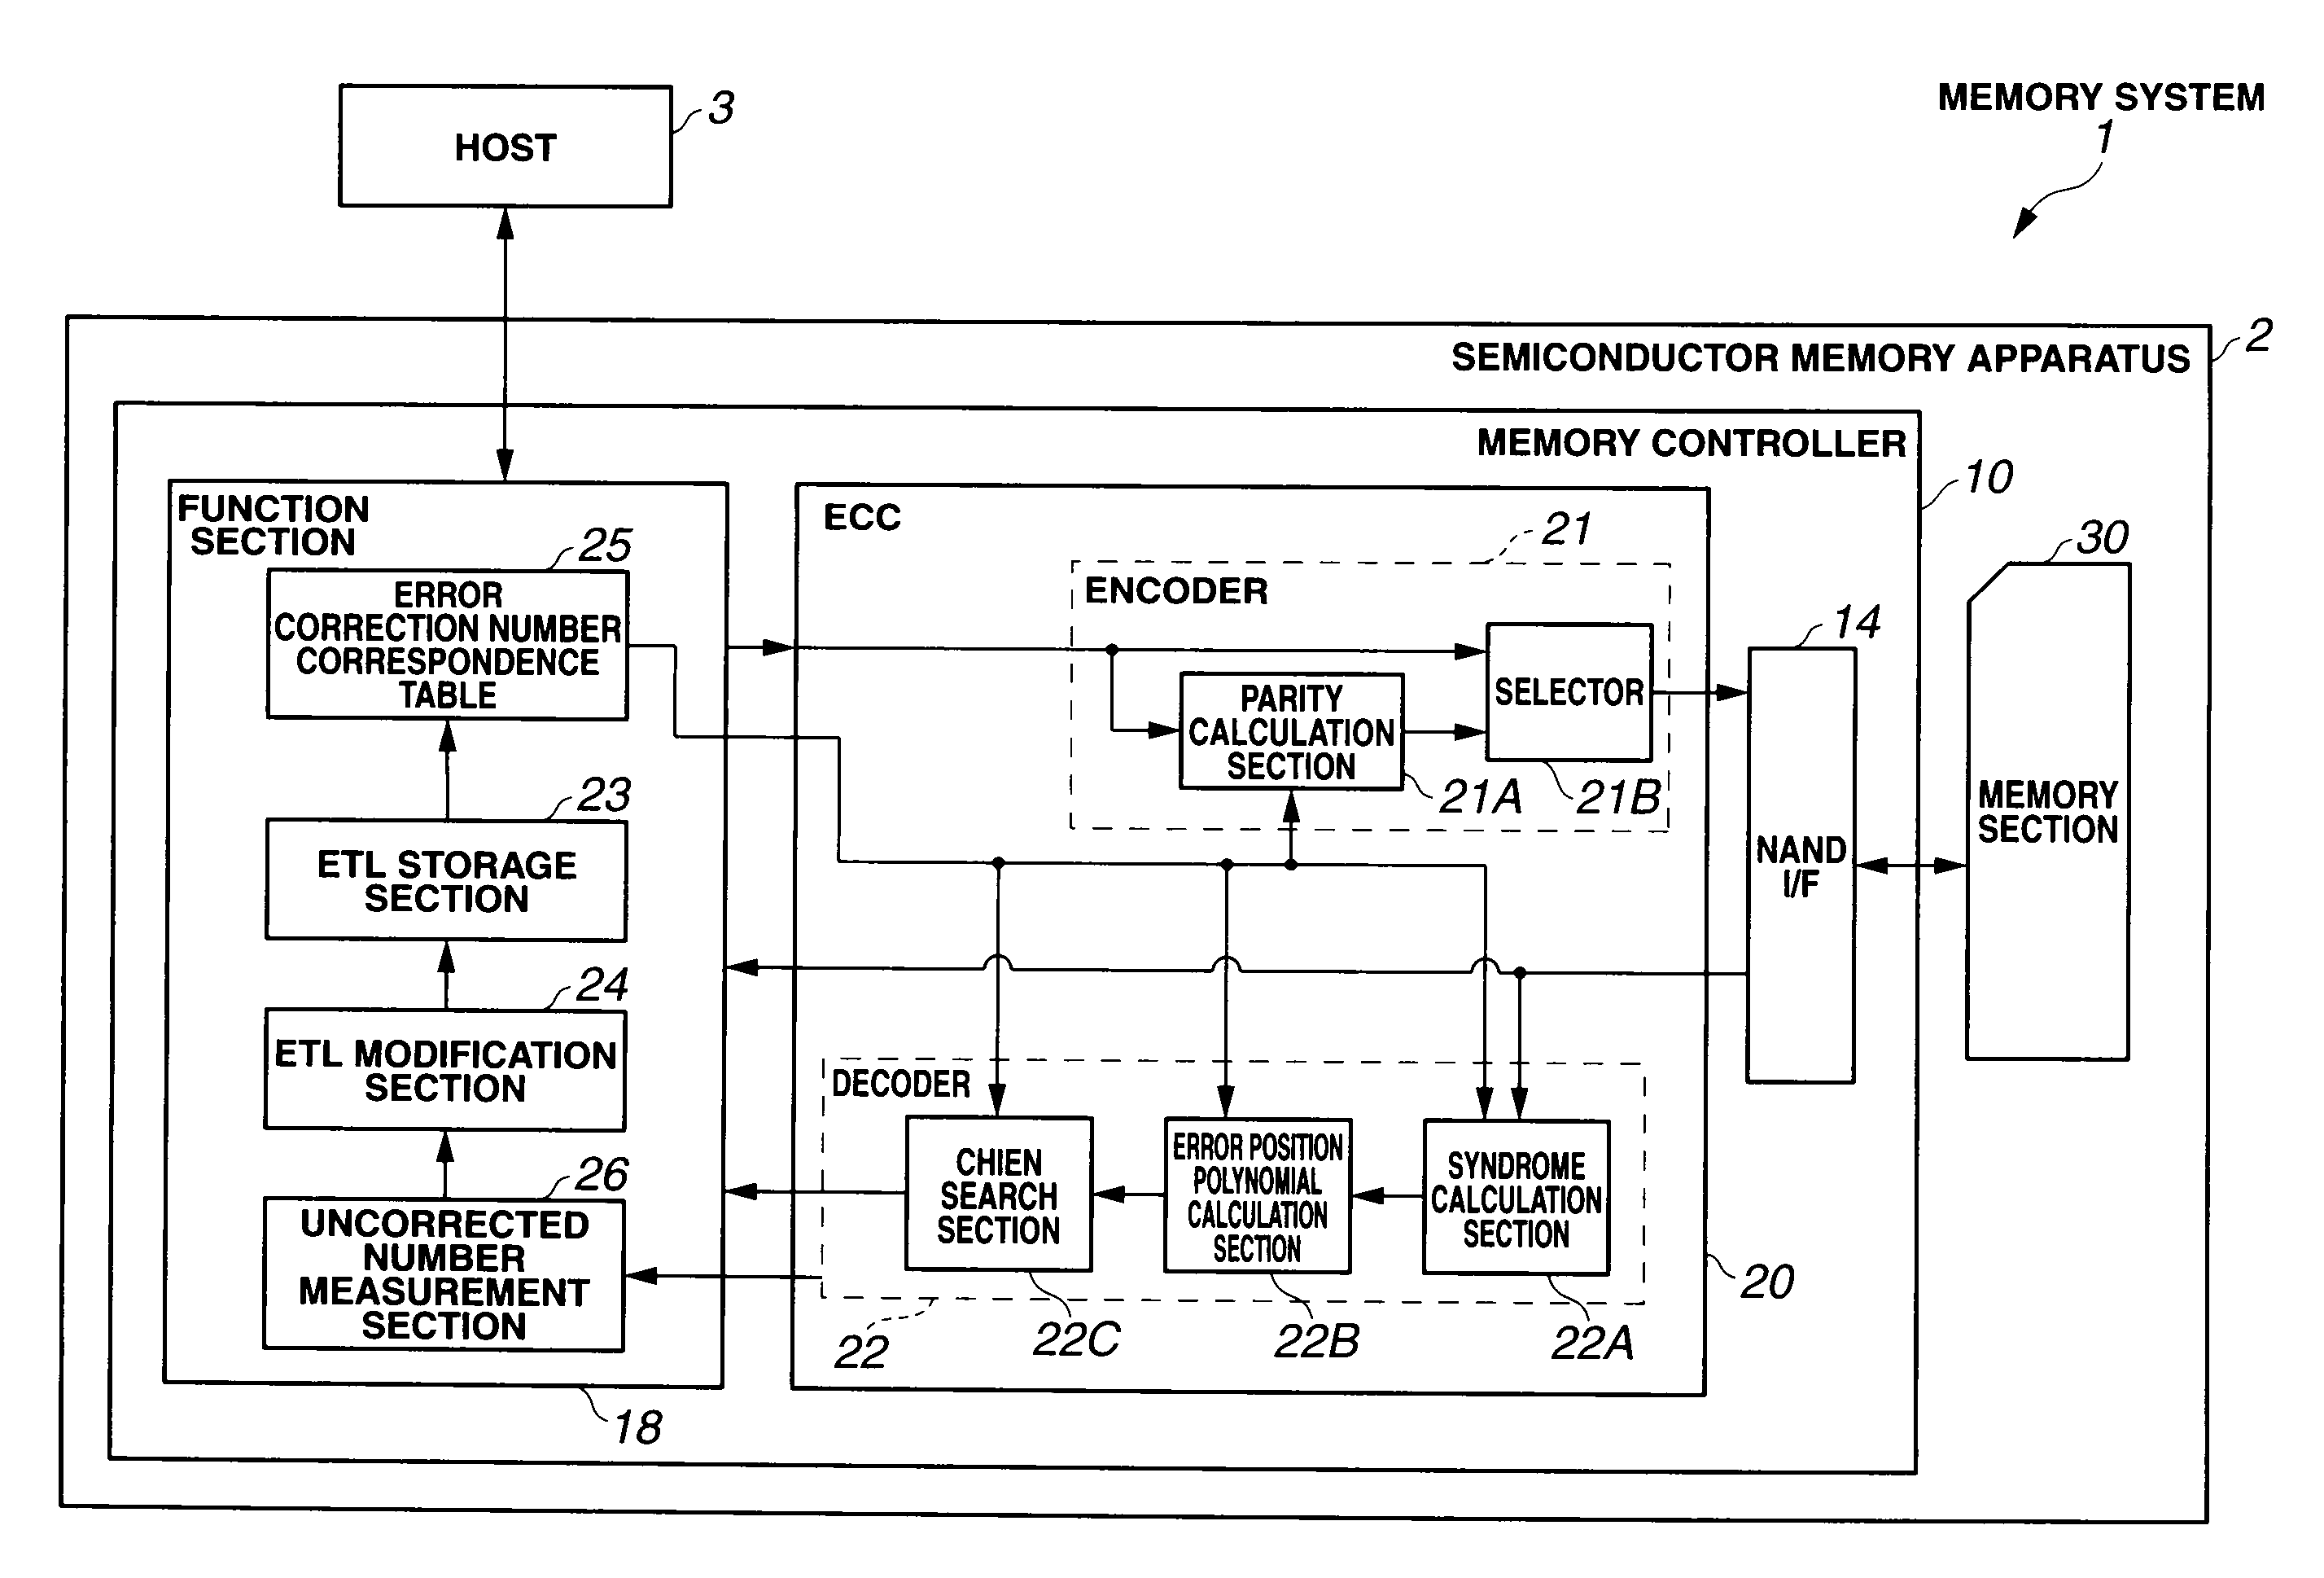 Memory controller and semiconductor memory apparatus